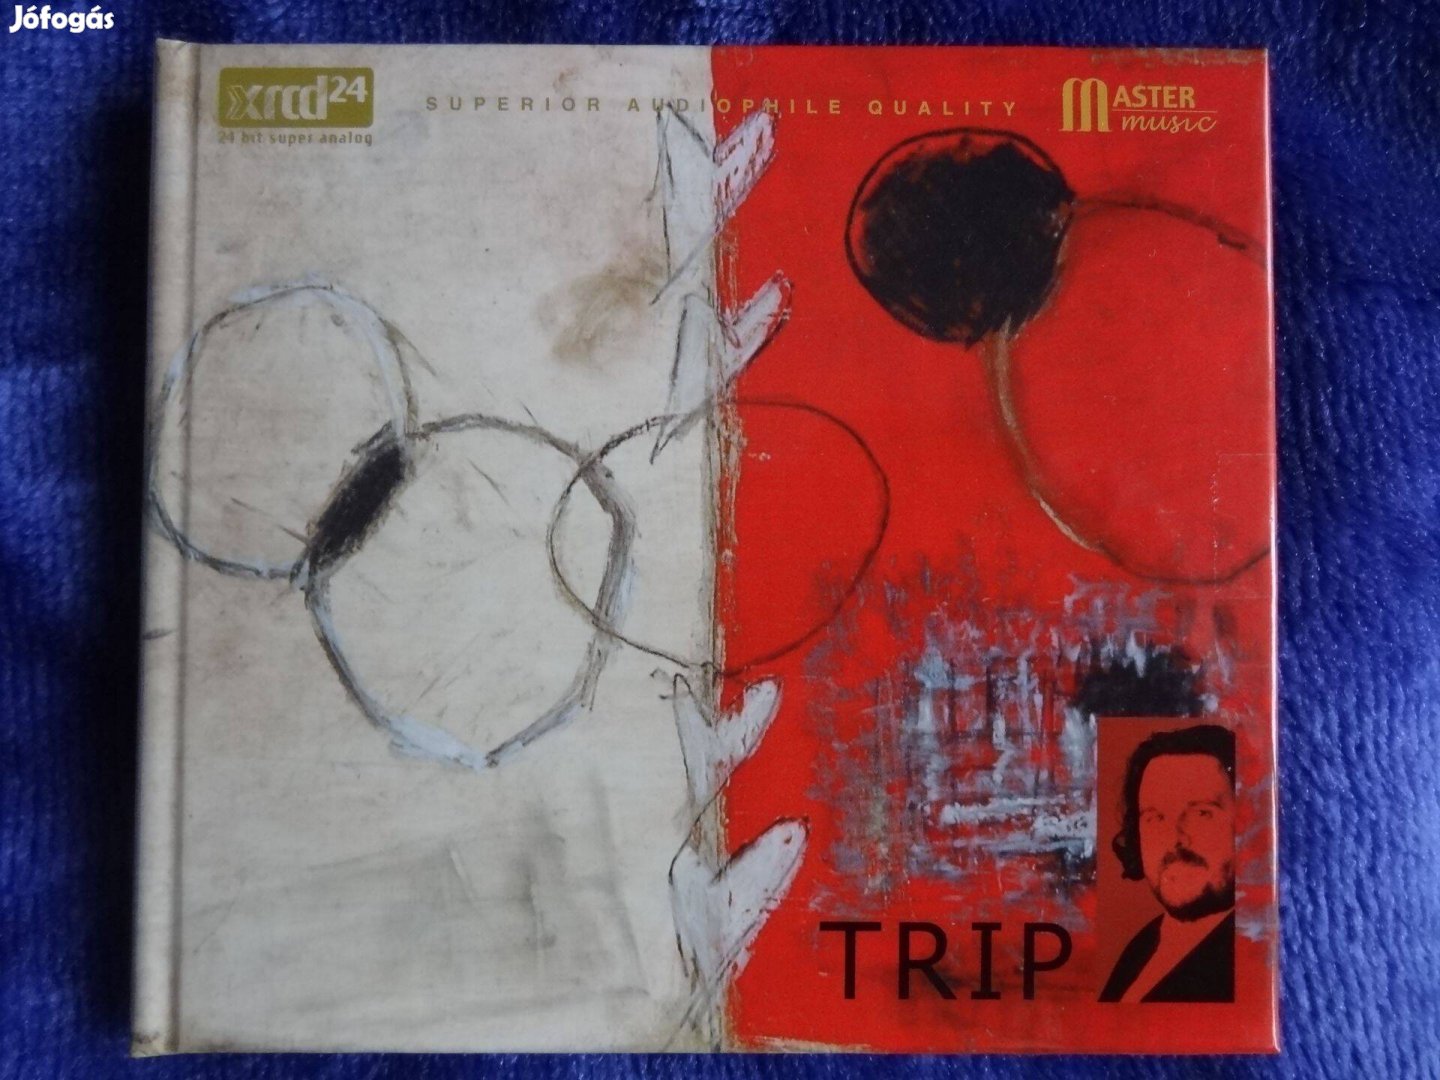 Trip Various Artists (Master Music JVC Xrcd24)